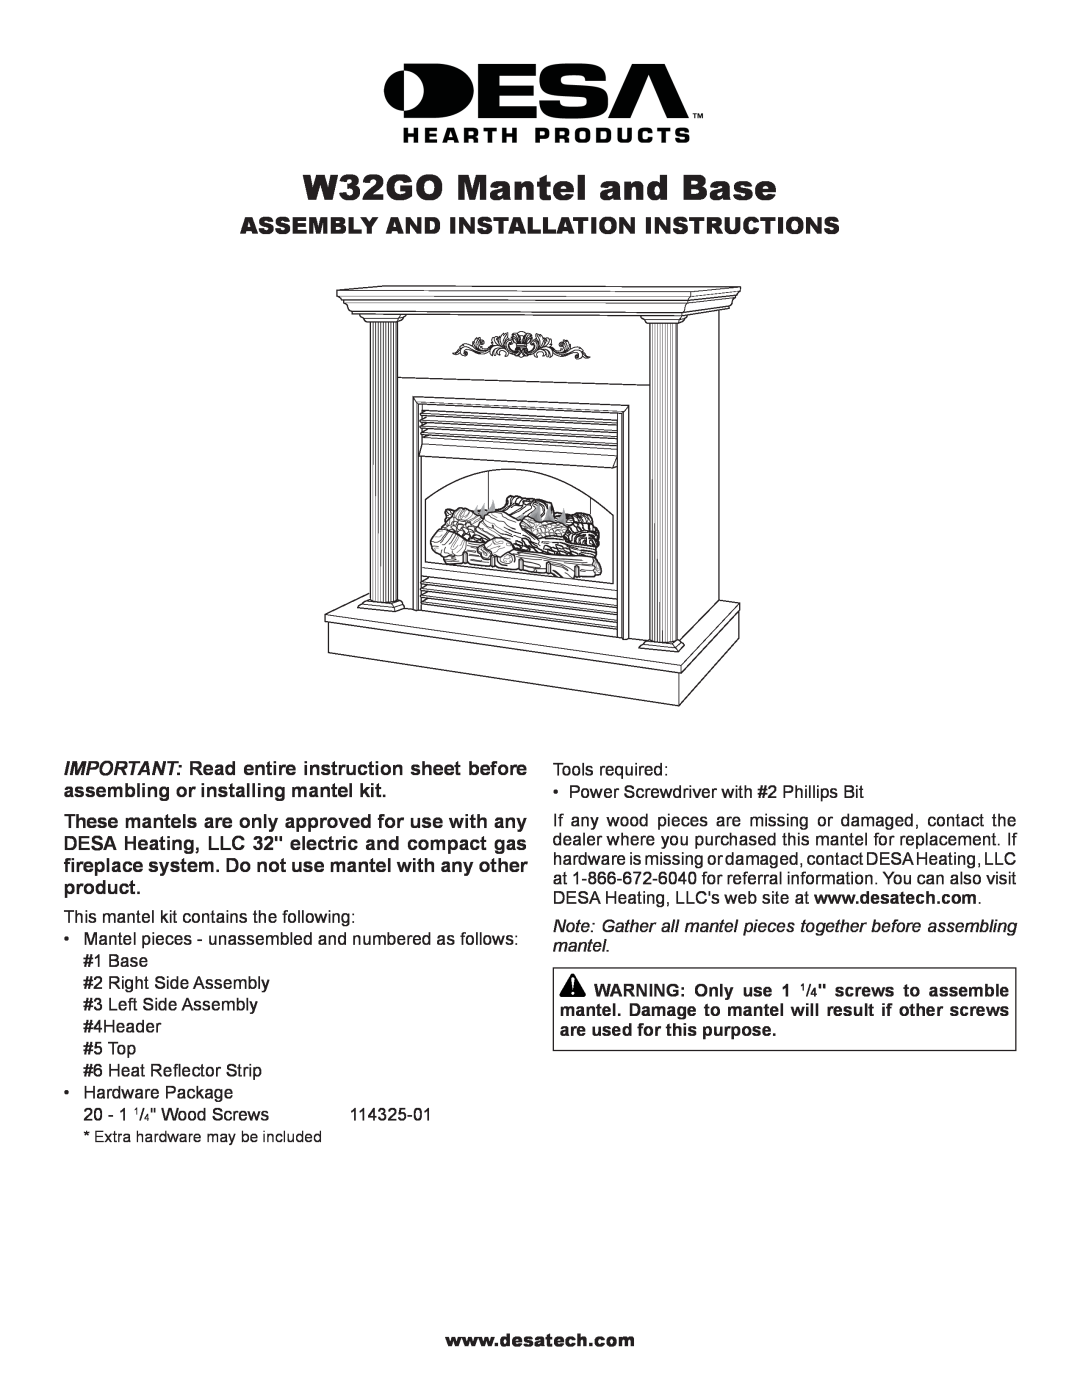 Desa installation instructions W32GO Mantel and Base, Assembly And Installation Instructions 